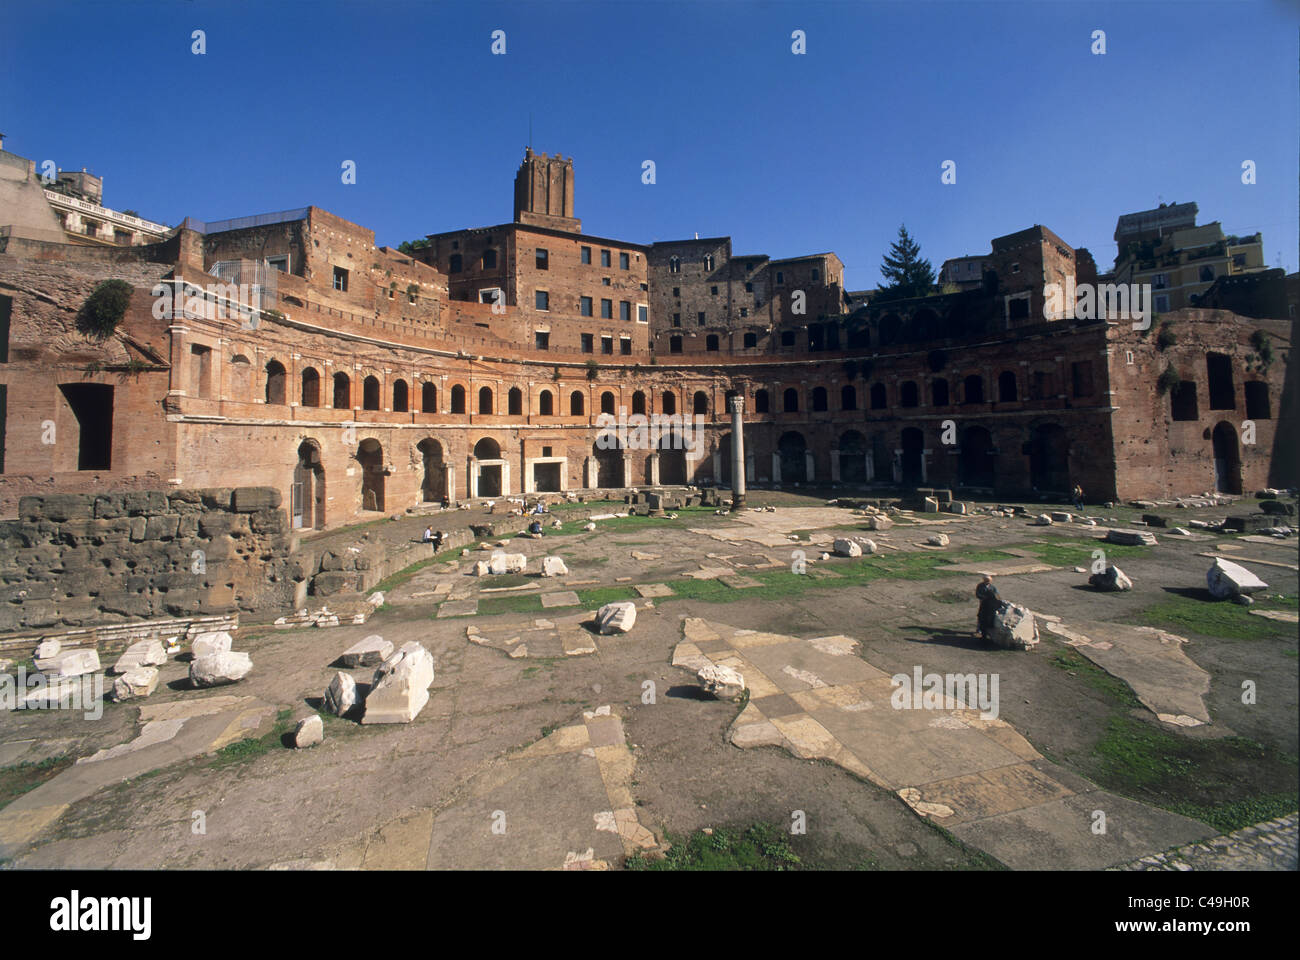 Photo de les ruines d'un ancien édifice romain en Italie Banque D'Images